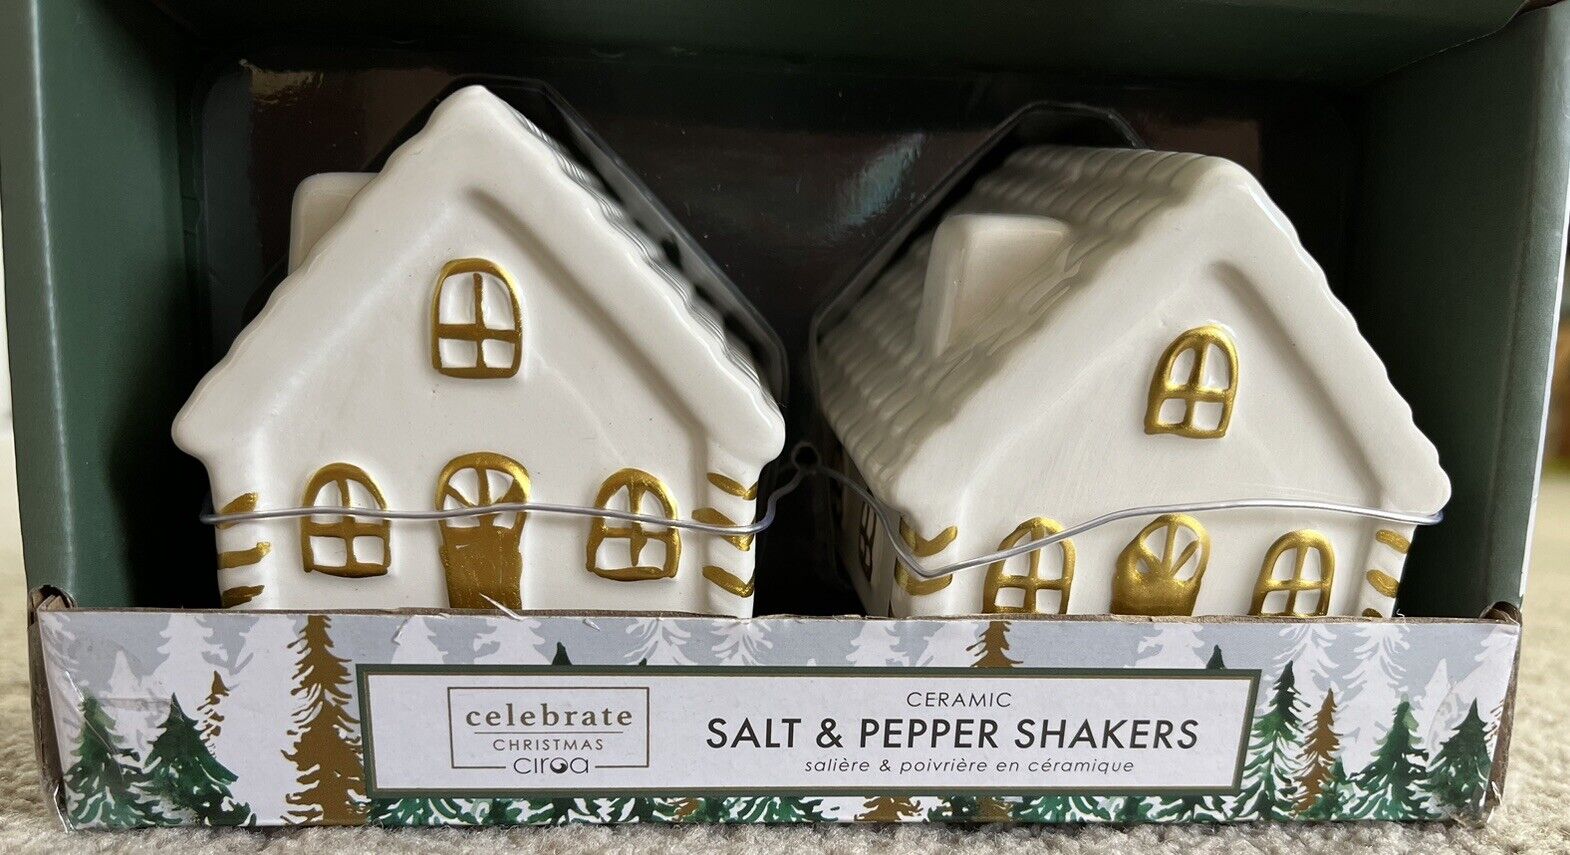 Celebrate Christmas Ciroa Ceramic Salt & Pepper Shakers Ivory Gold House